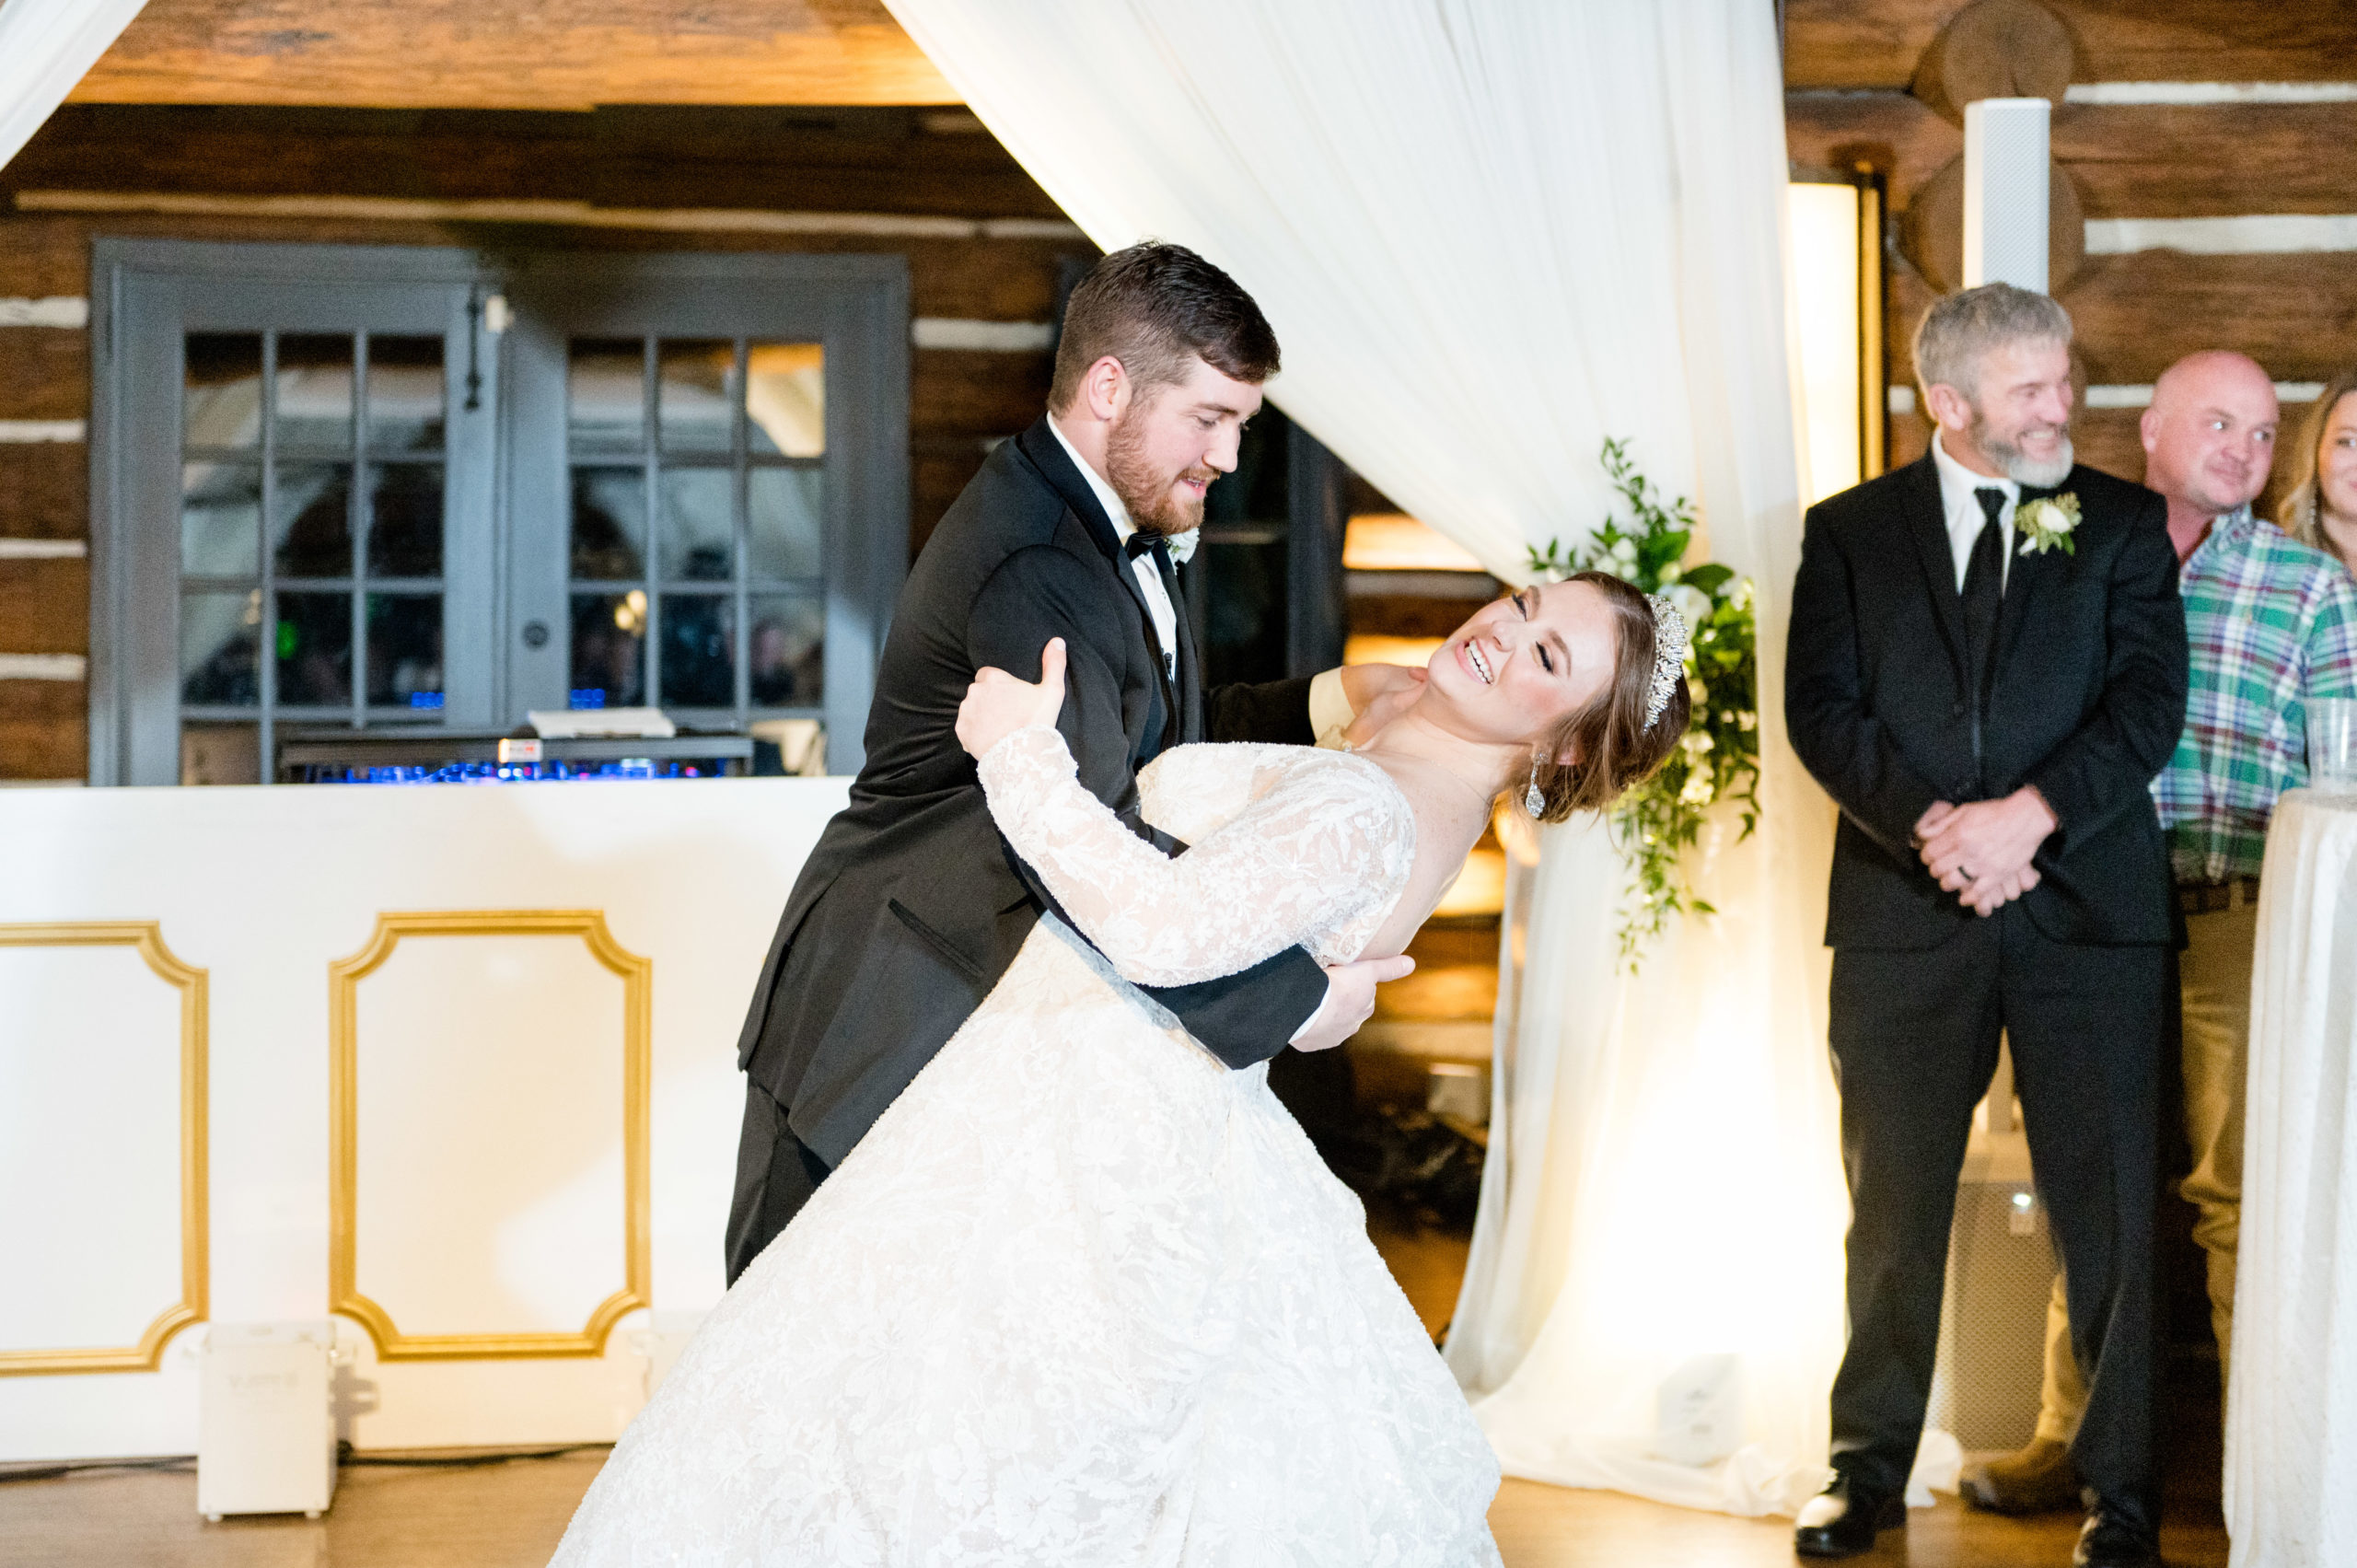 Groom dips bride at reception.